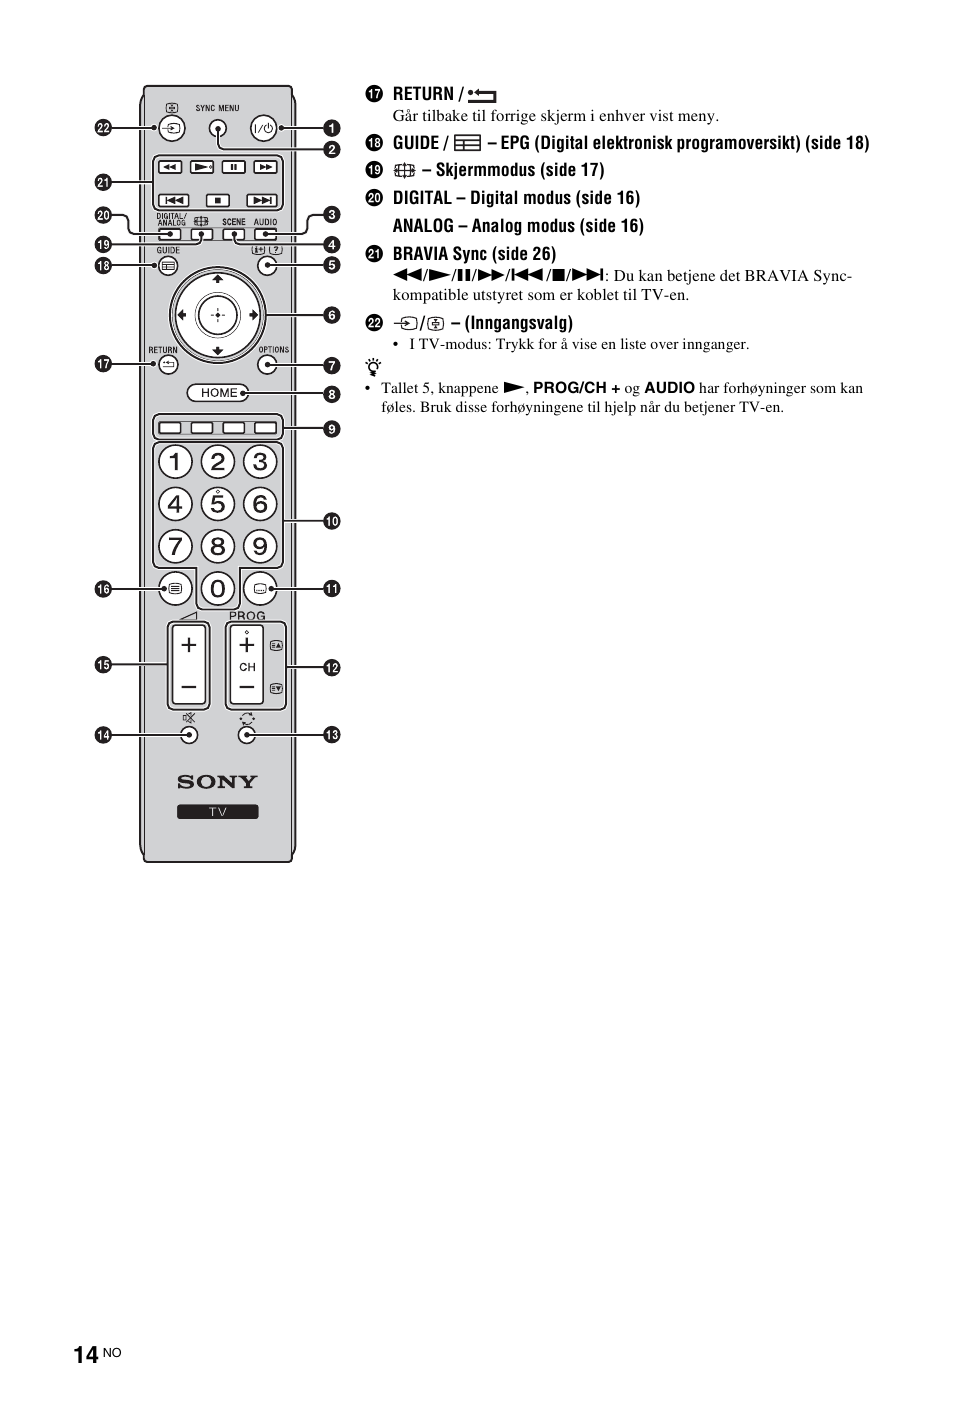 Телевизор sony управление. Телевизор сони пульт управления инструкция. KDL 32ex310. Инструкция к пульту сони ТВ. Sony KDL-26bx320.